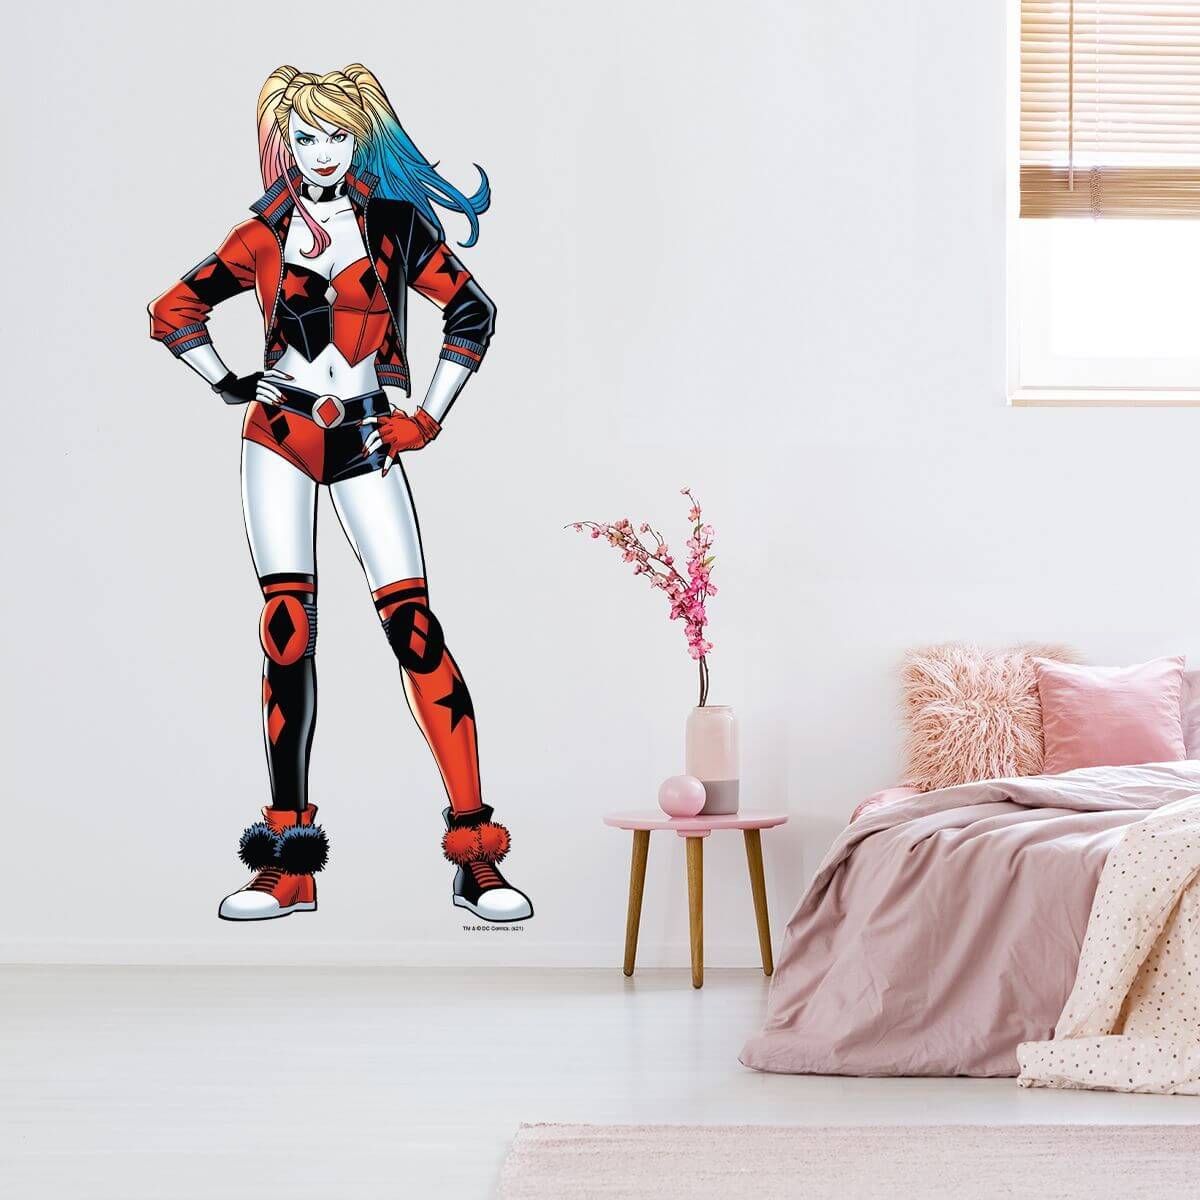 Kismet Decals Harley Quinn Wildcard Licensed Wall Sticker - Easy DIY Justice League Home & Room Decor Wall Art - Kismet Decals